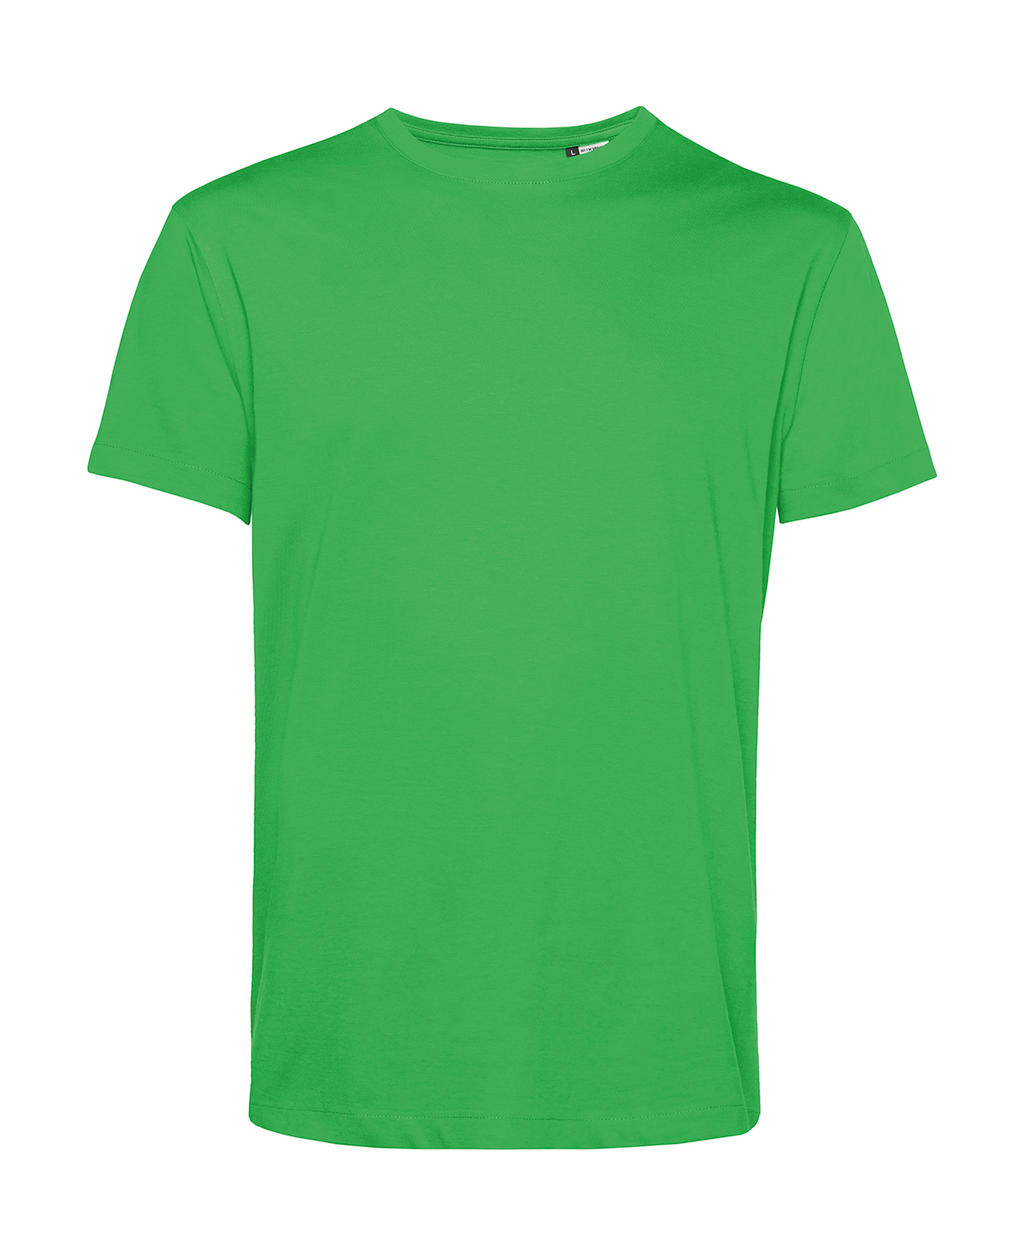 Tričko BC Organic Inspire E150 - zelené, XL